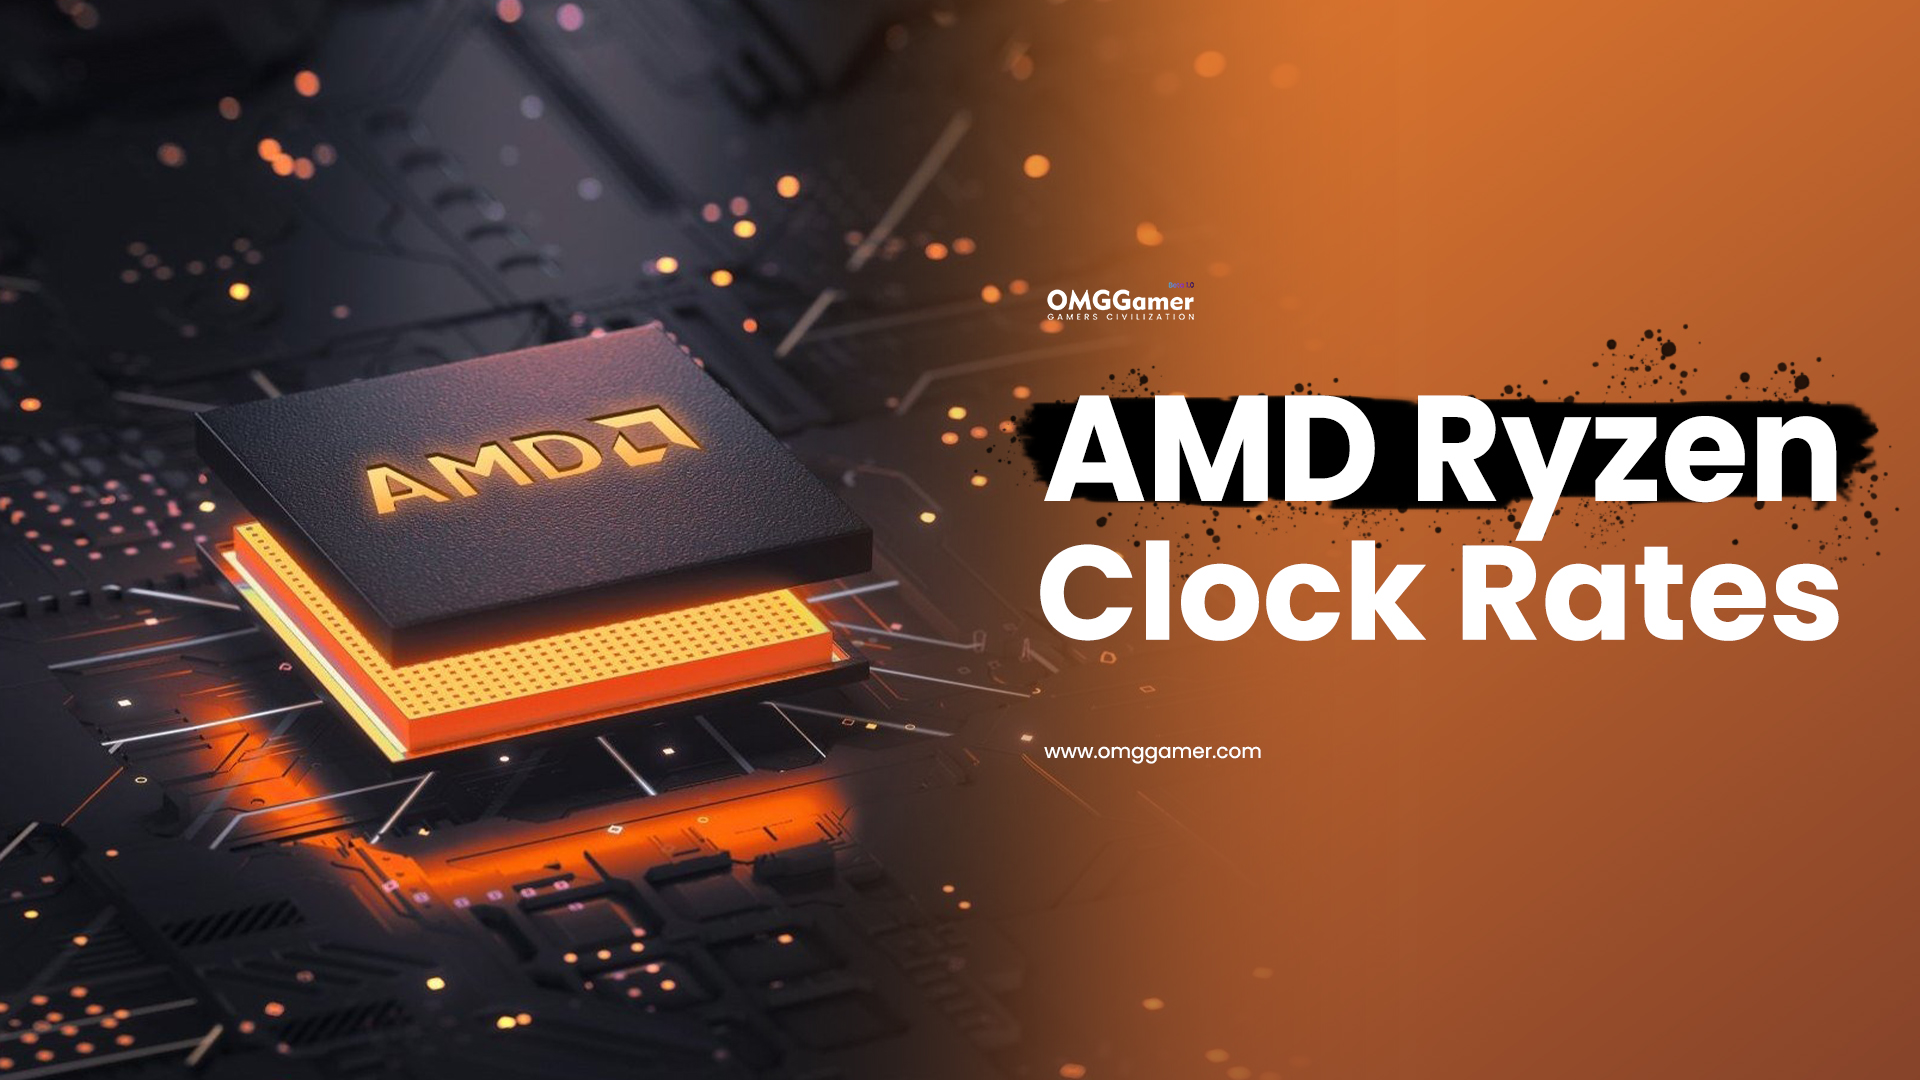 AMD Ryzen Clock Rates